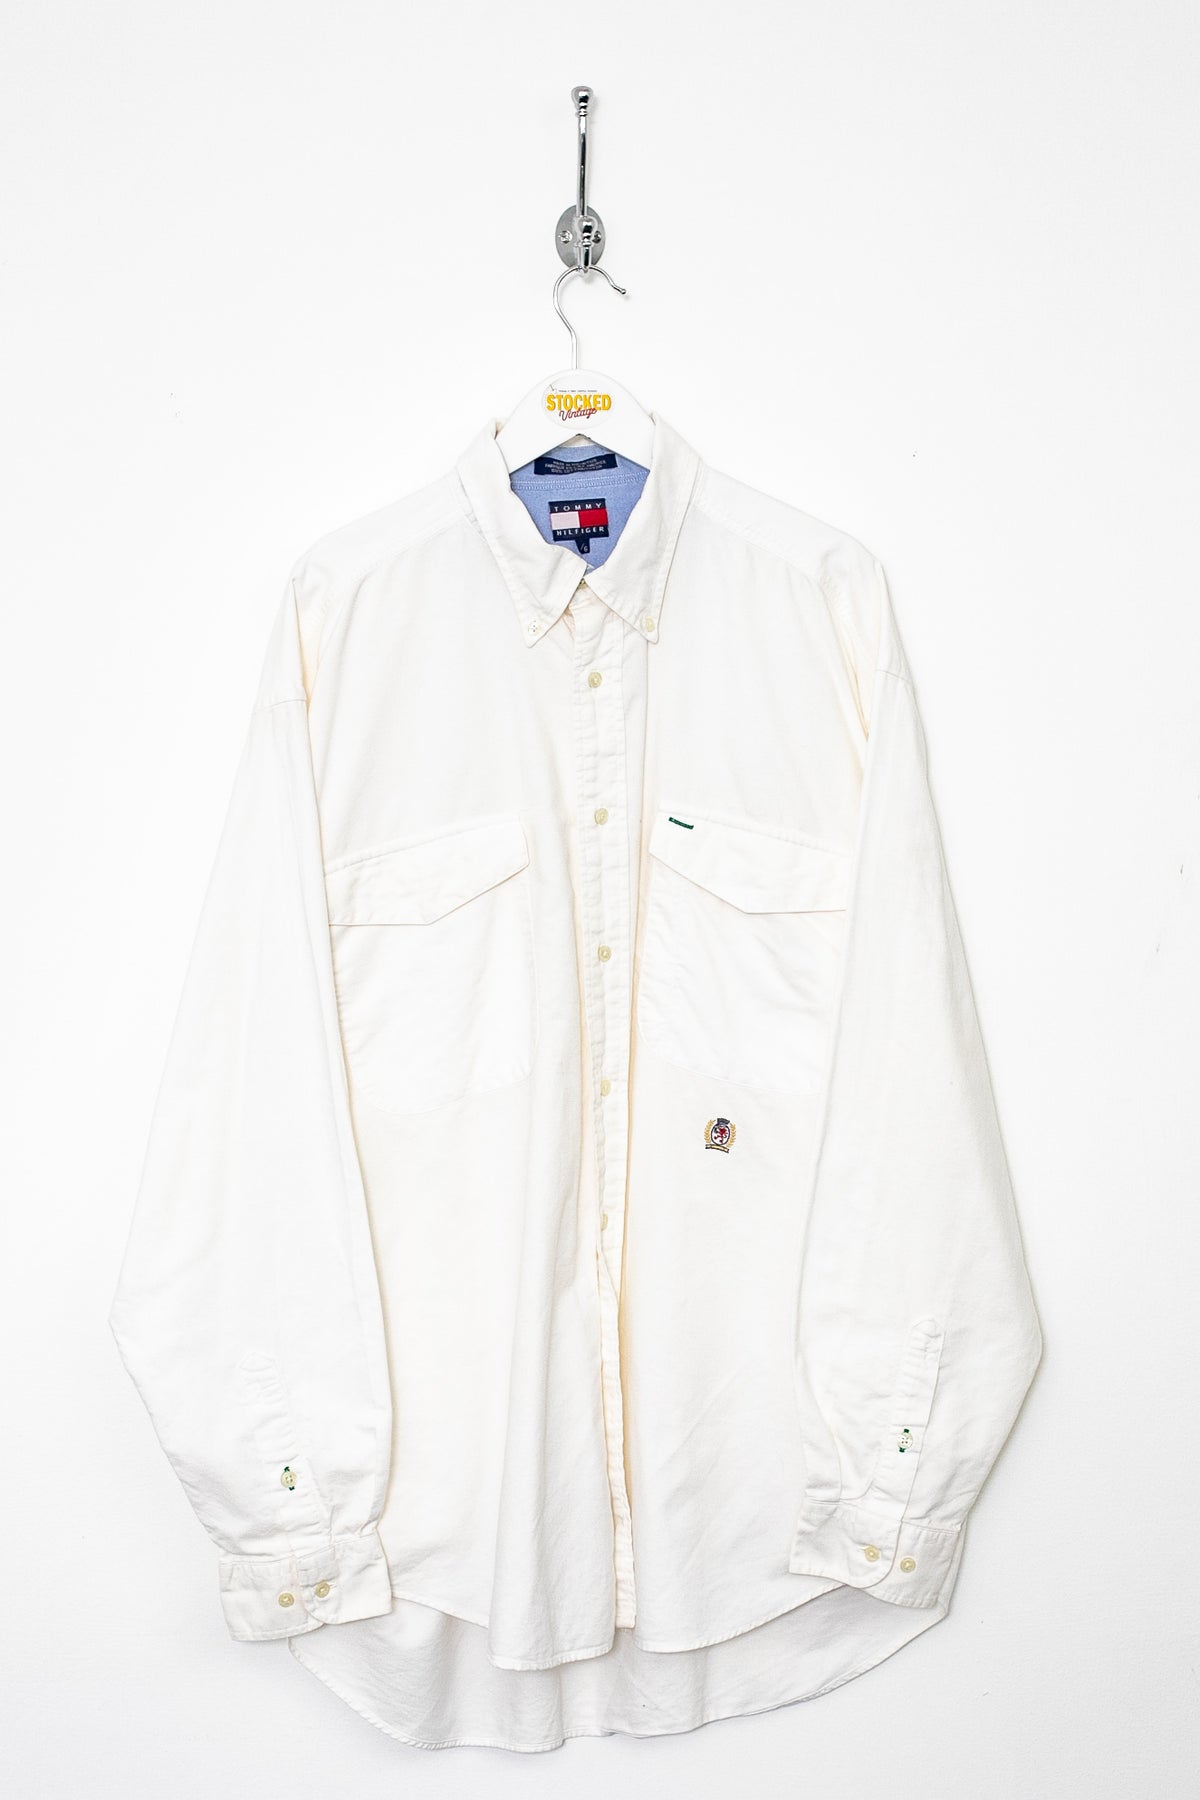 90s Tommy Hilfiger Shirt (L)